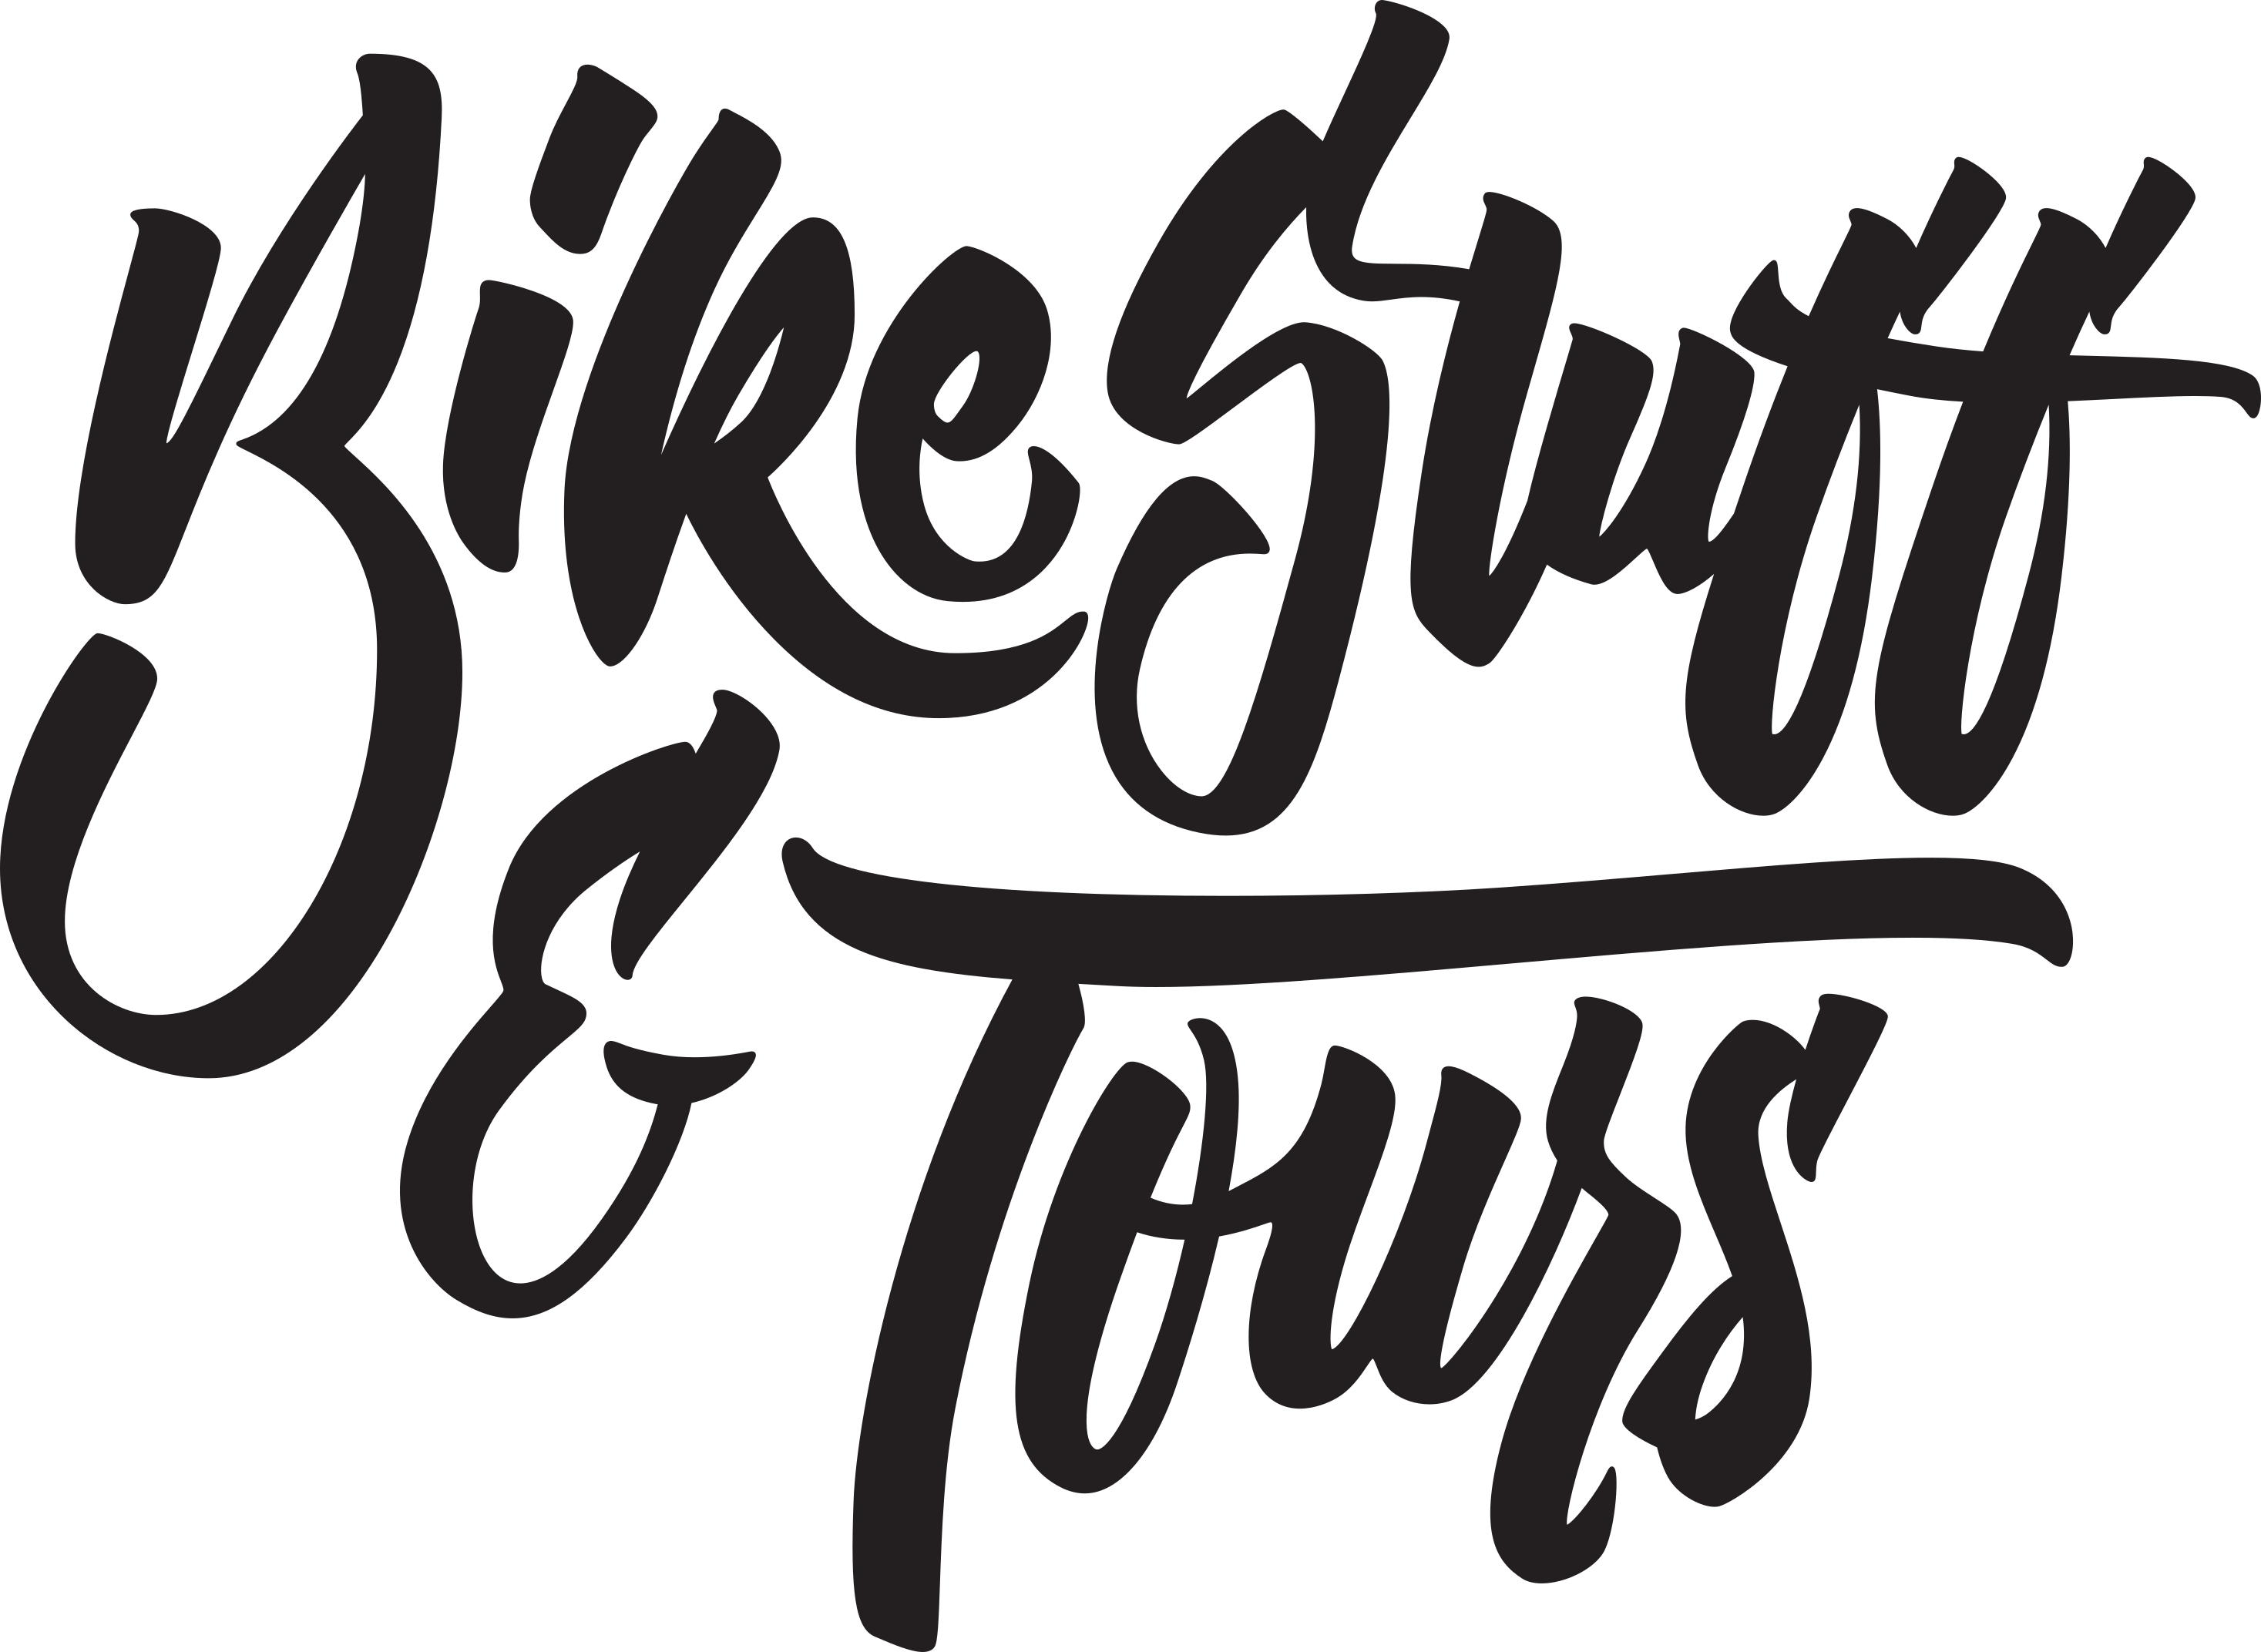 Bike Stuff & Tours